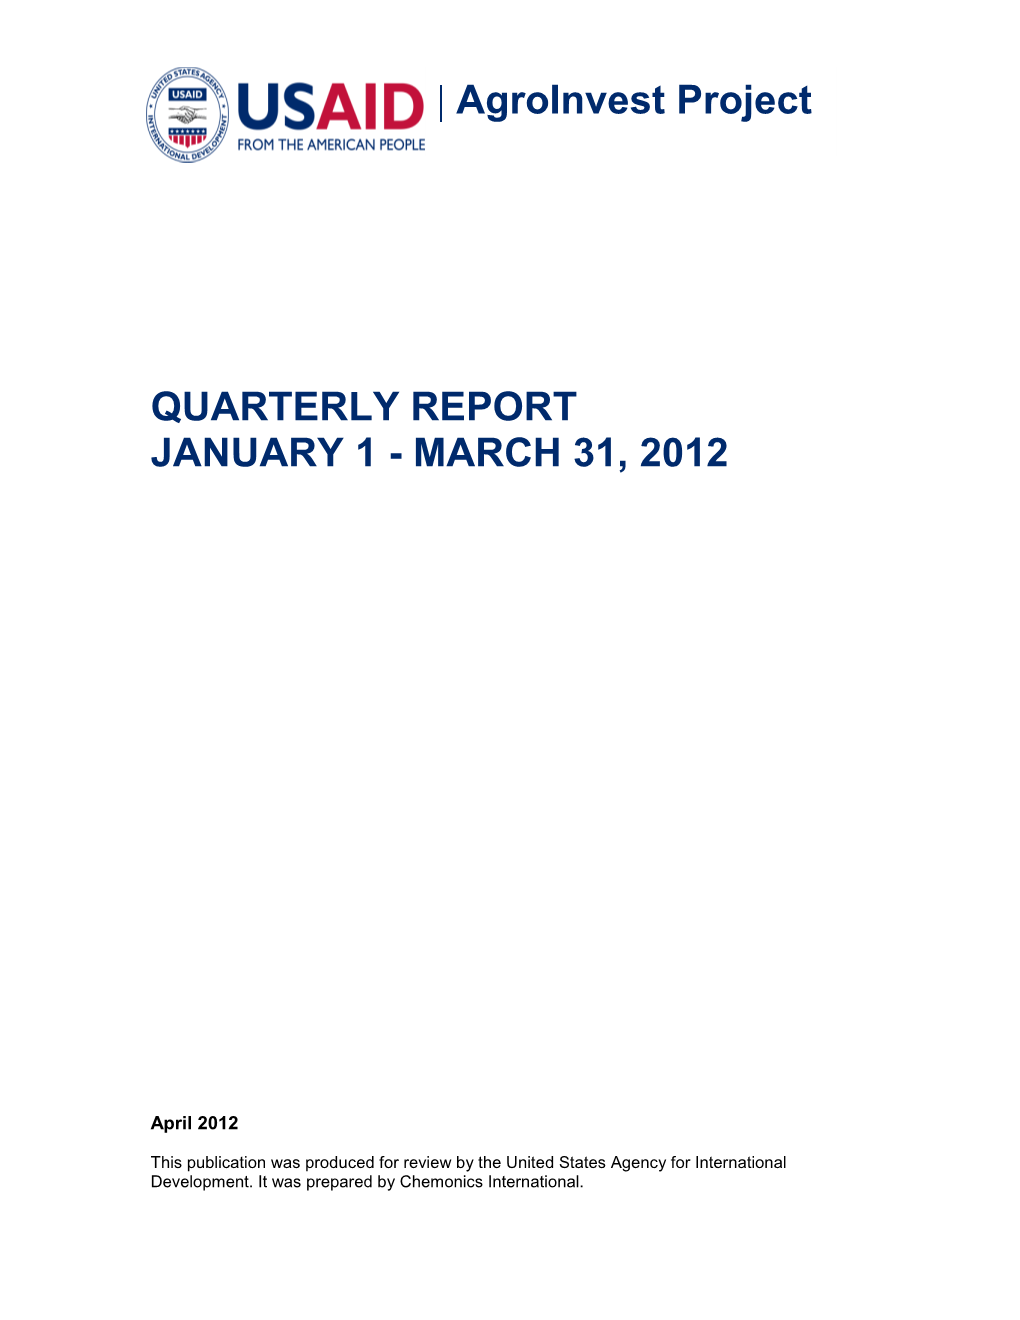 Agroinvest Quarterly Report